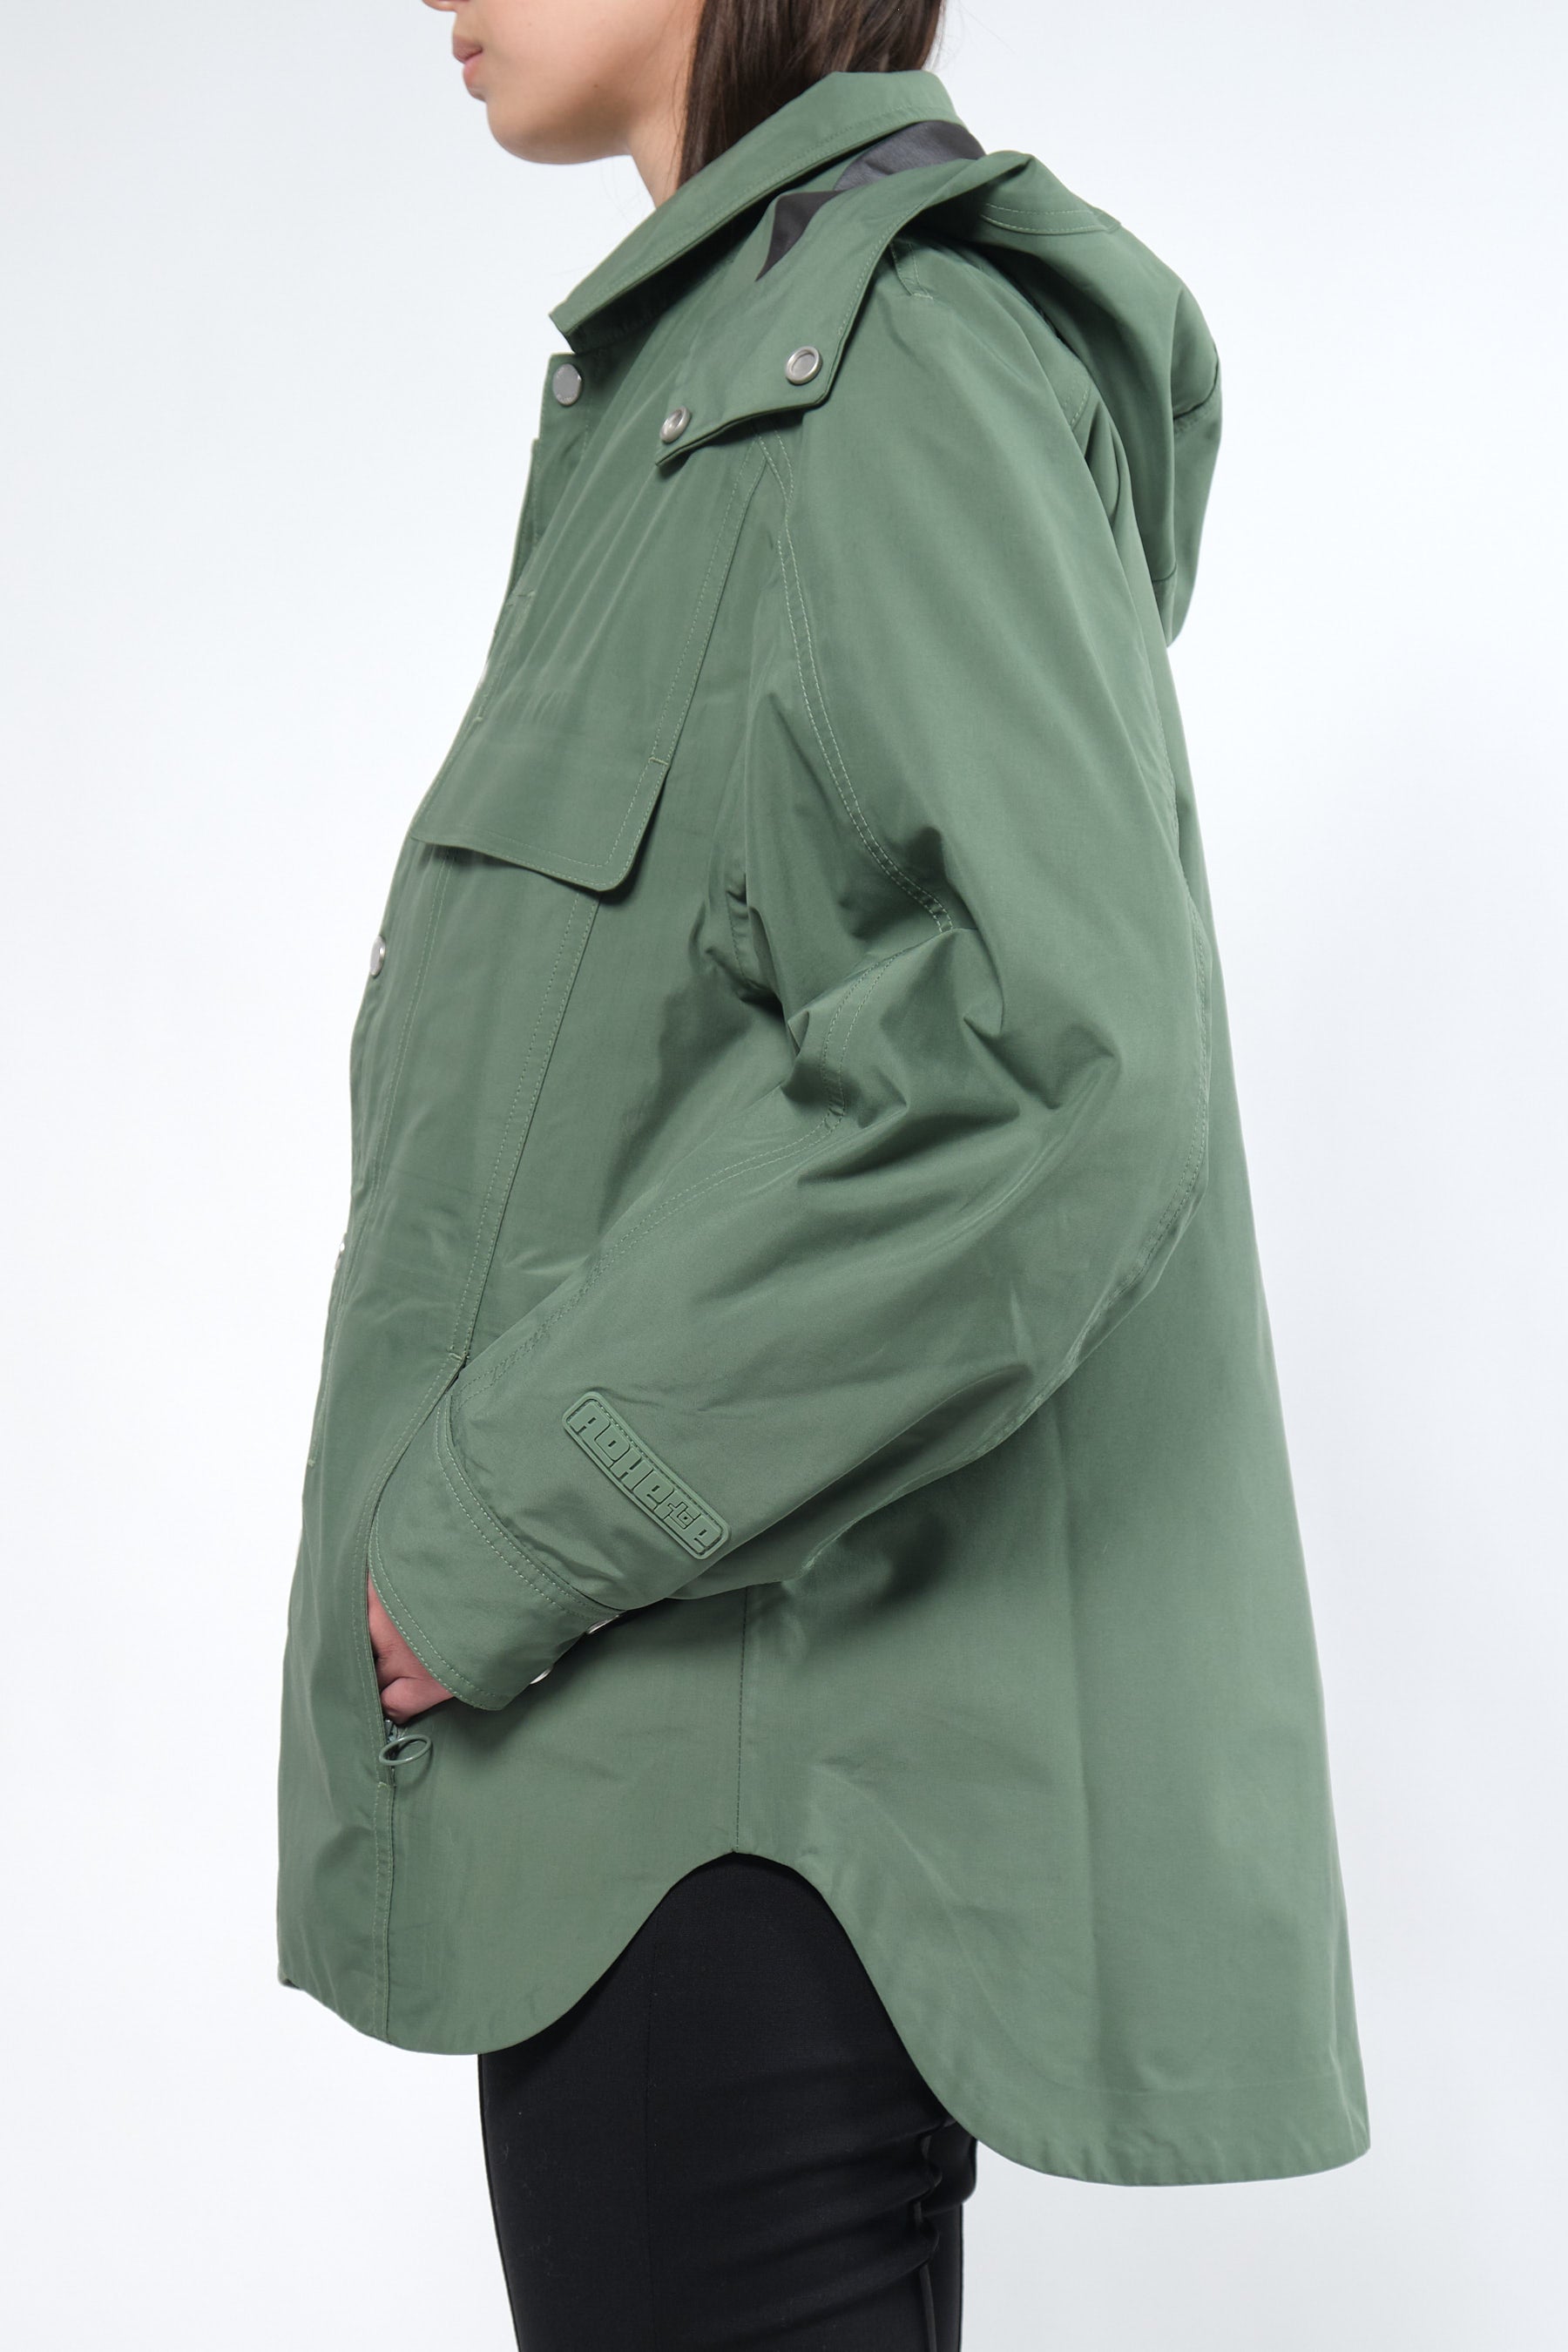  3L Green Waterproof Rain Jacket with Hood - Adhere To  - 10